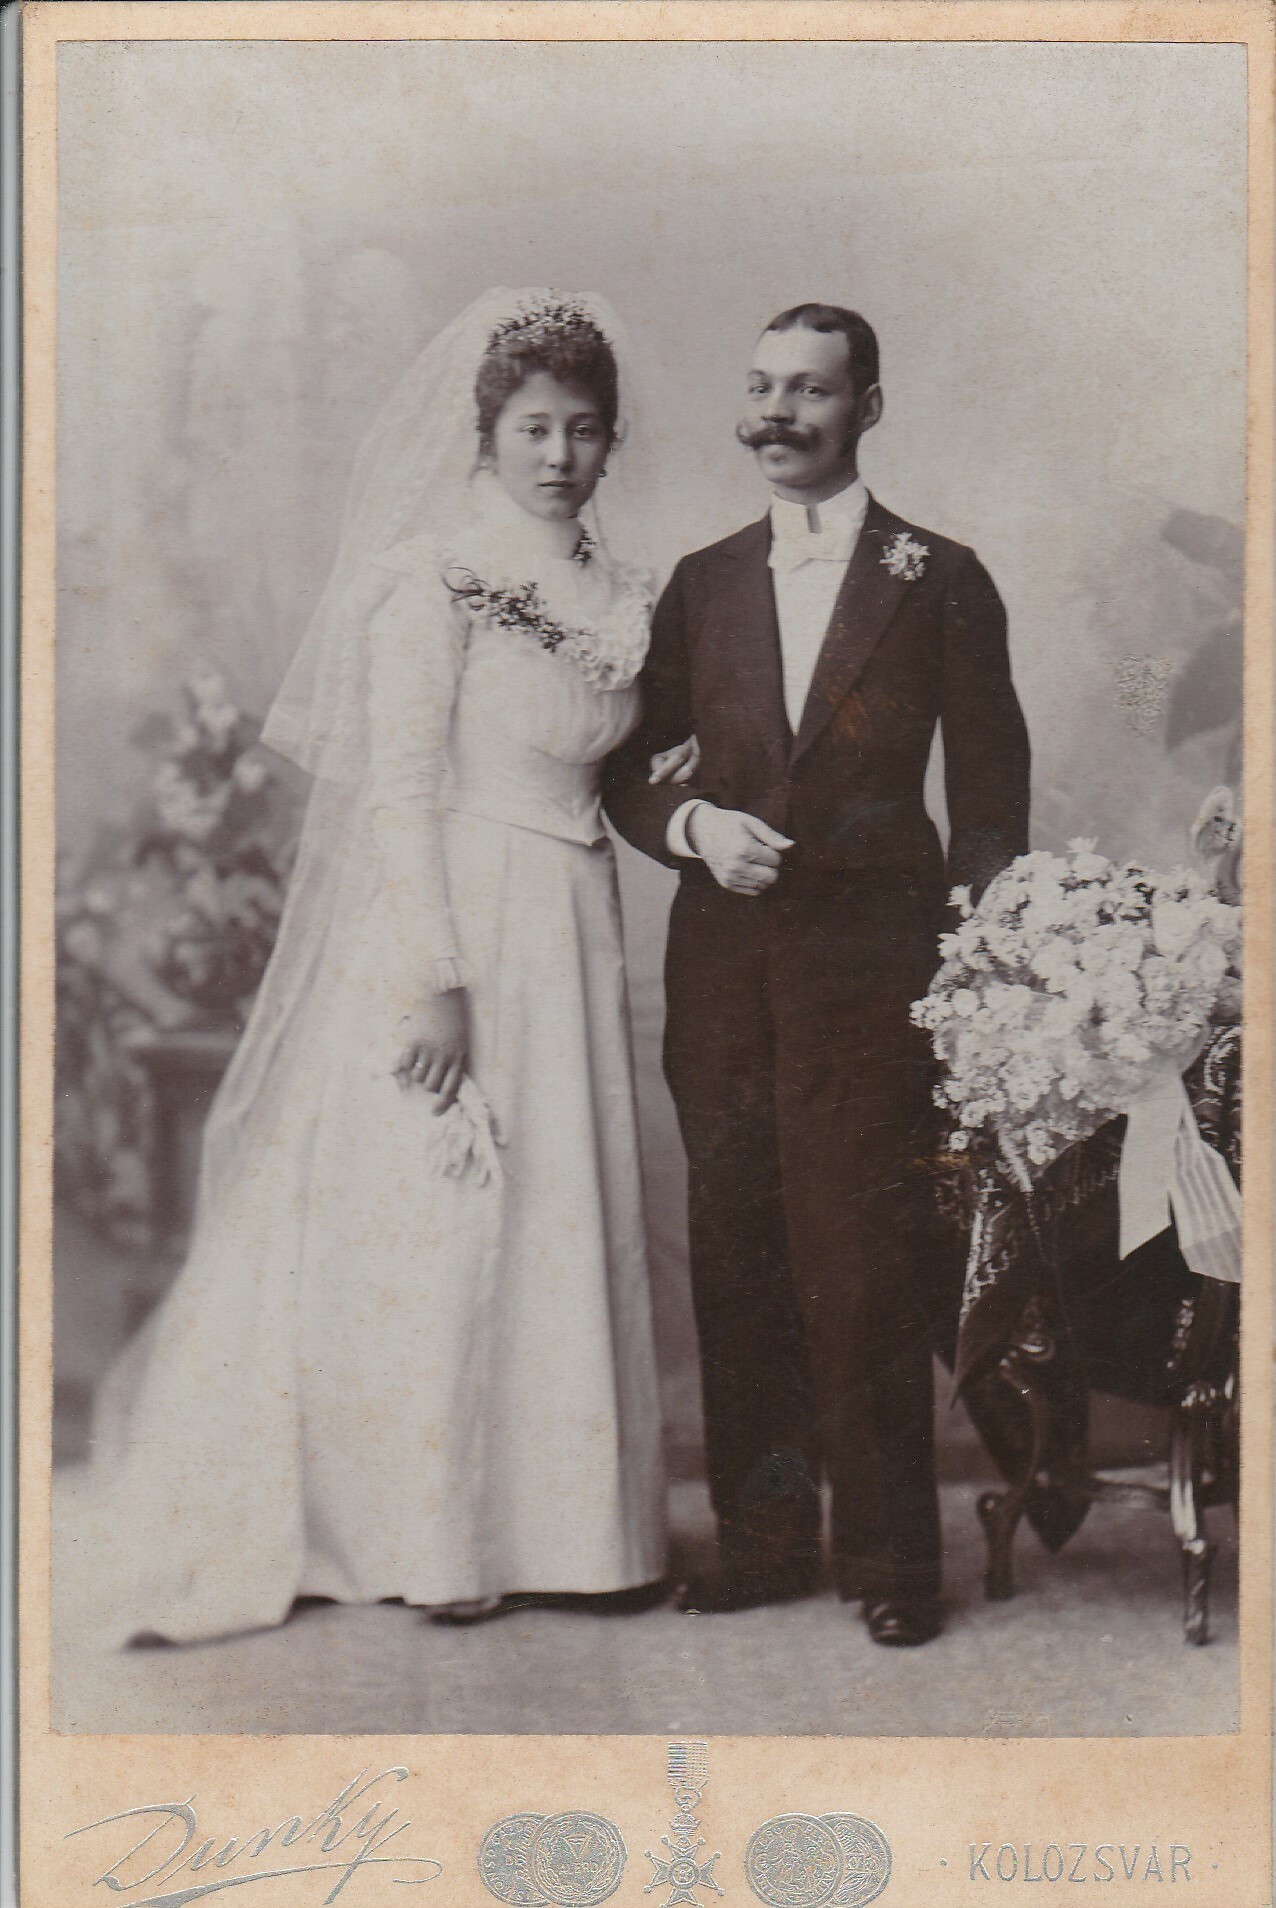 Esküvői fotó Kolozsvárról (Tapolcai Városi Múzeum CC BY-NC-SA)